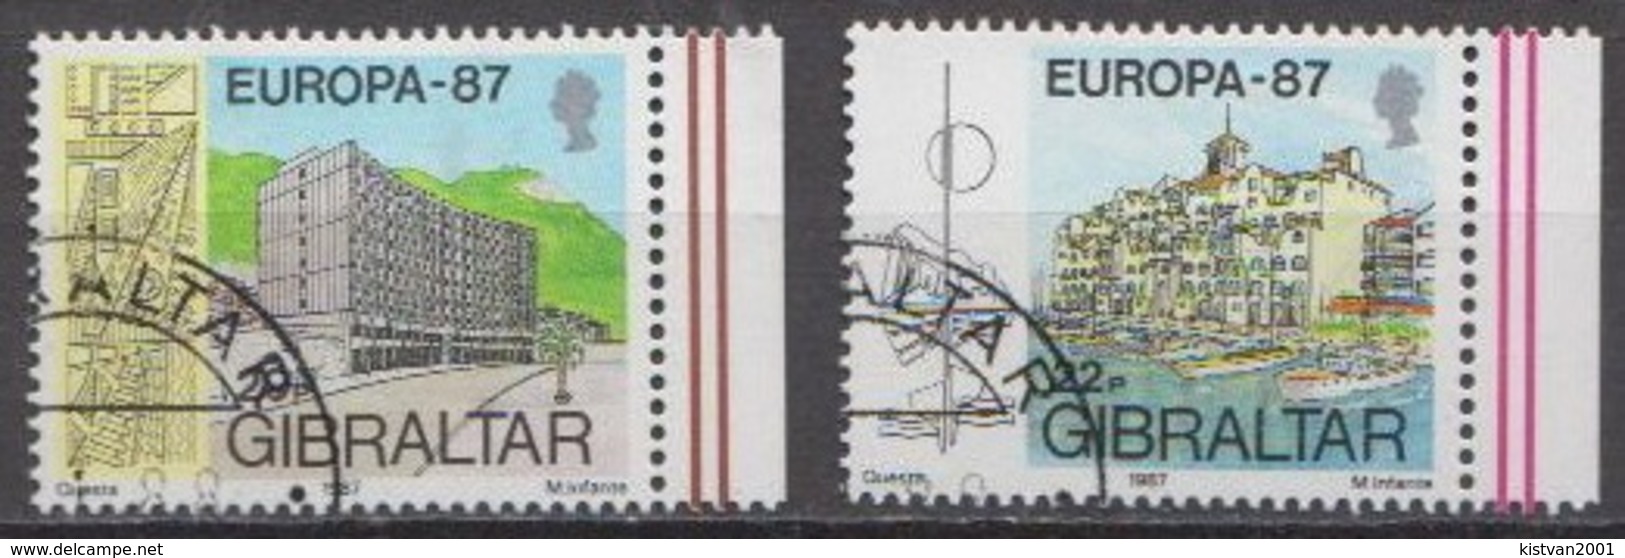 Gibraltar Used Set - 1987